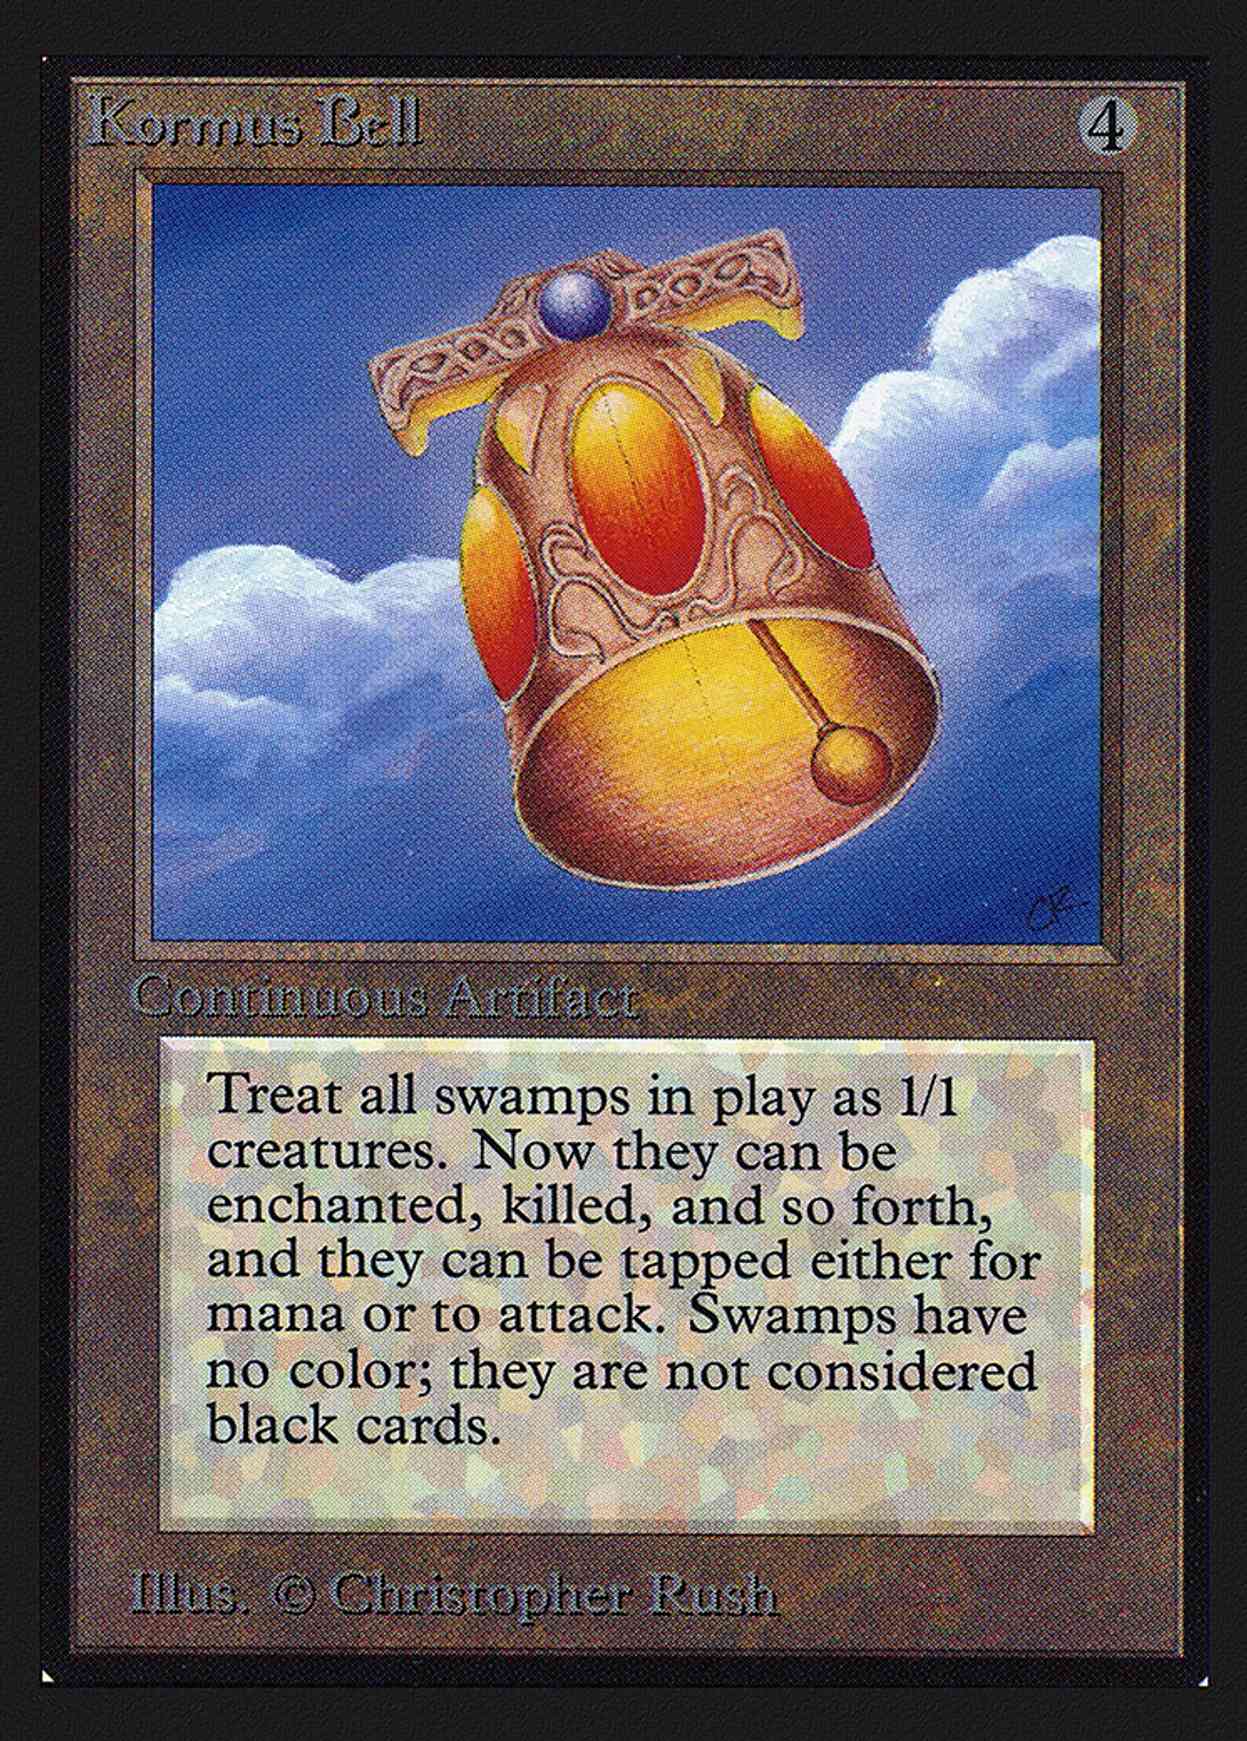 Kormus Bell (CE) magic card front